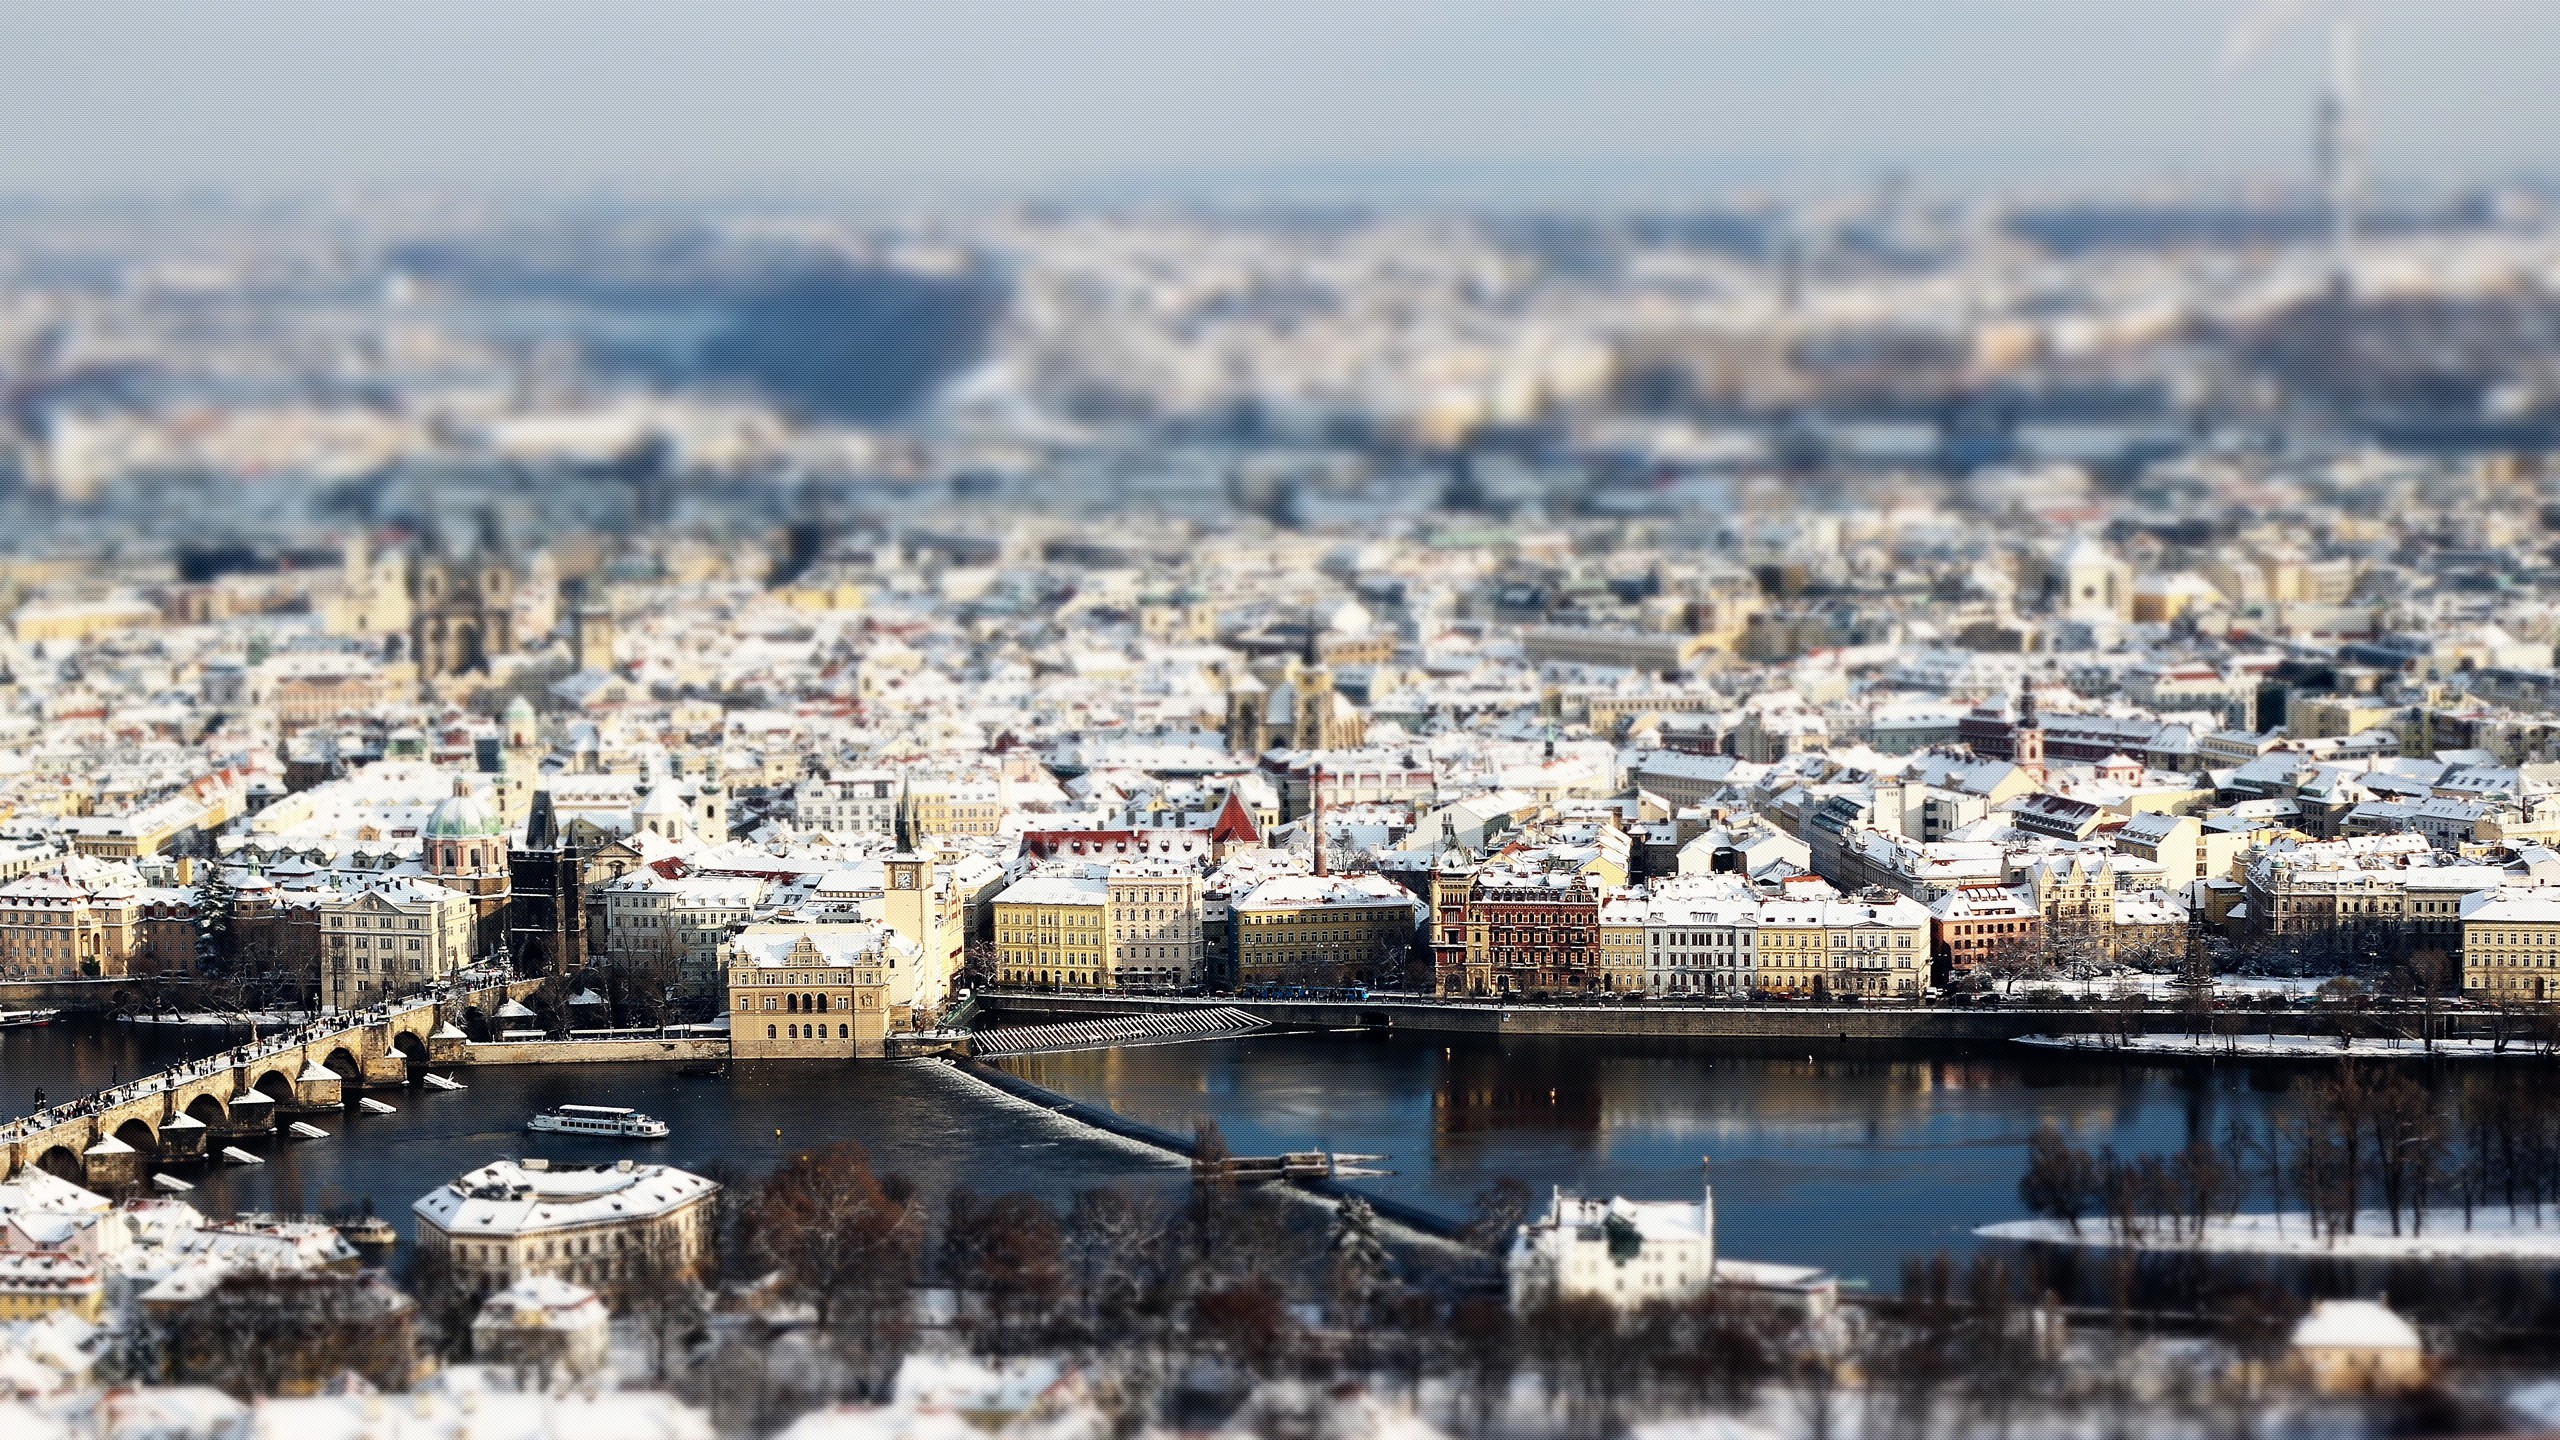 General 2560x1440 Prague river building tilt shift cityscape digital art rooftops winter snow